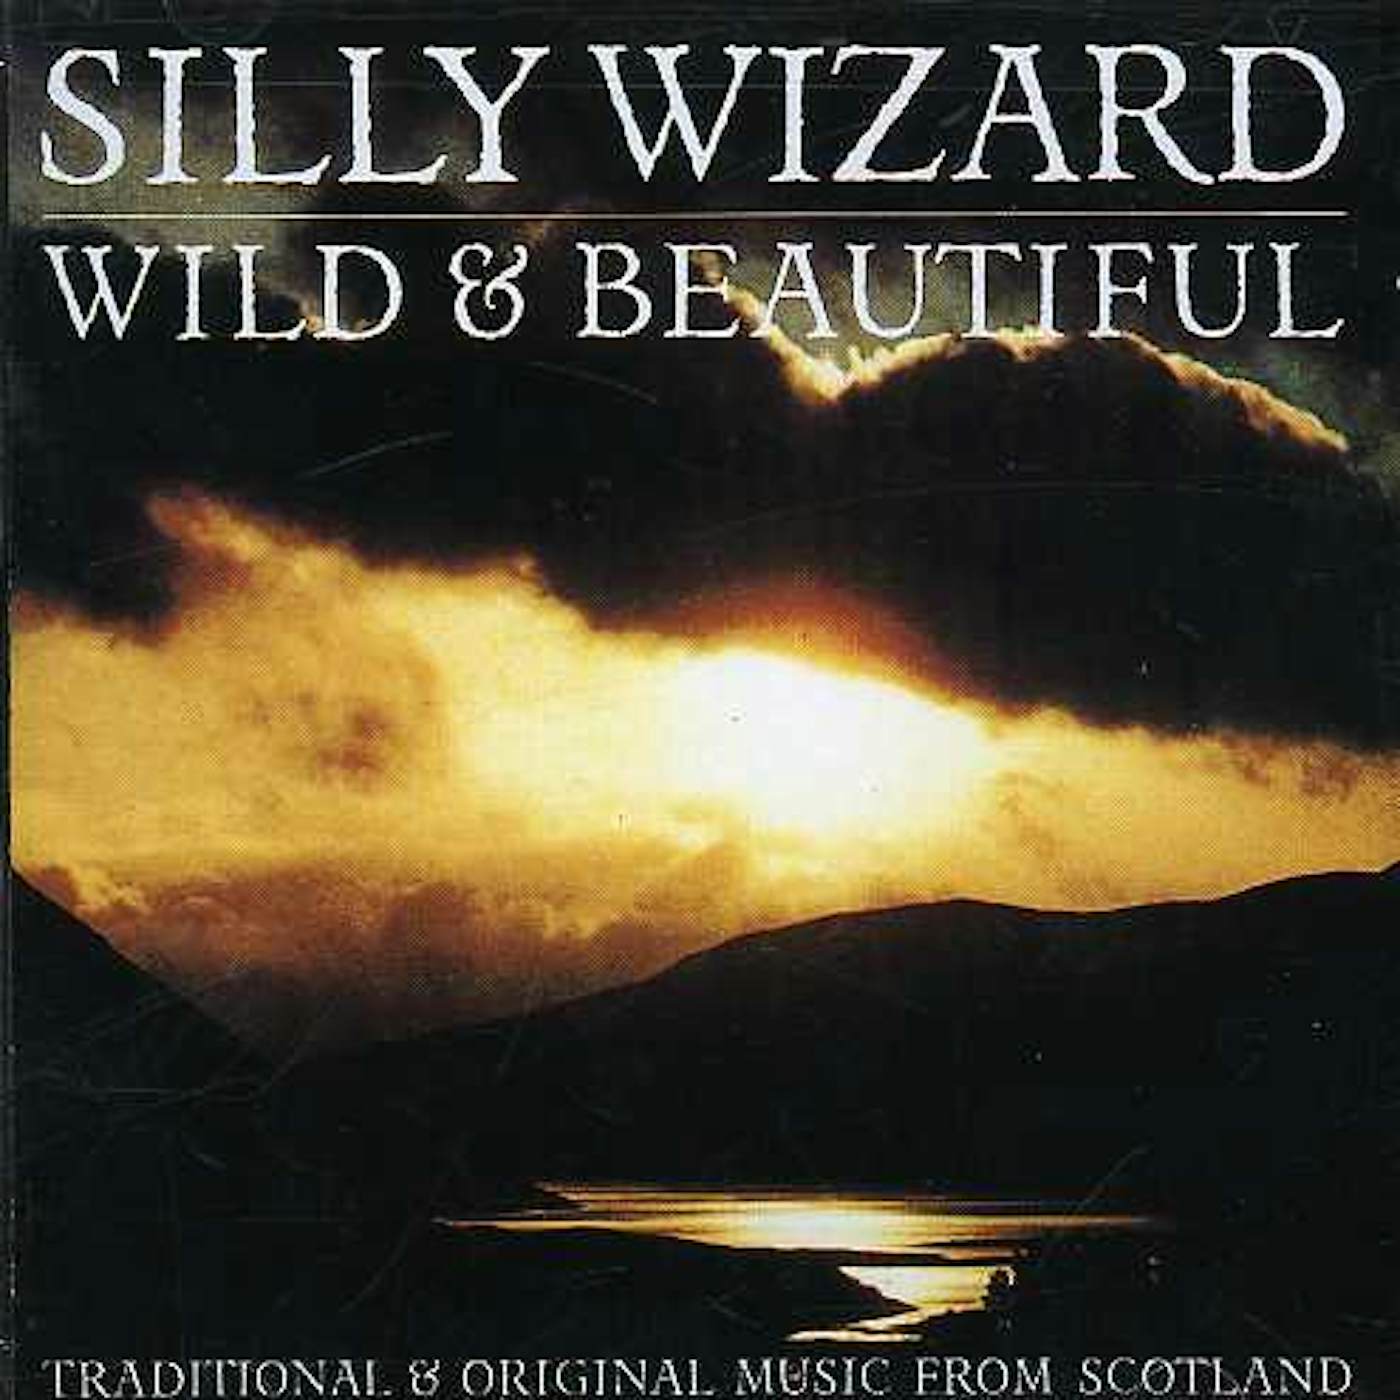 Silly Wizard WILD & BEAITIFUL CD